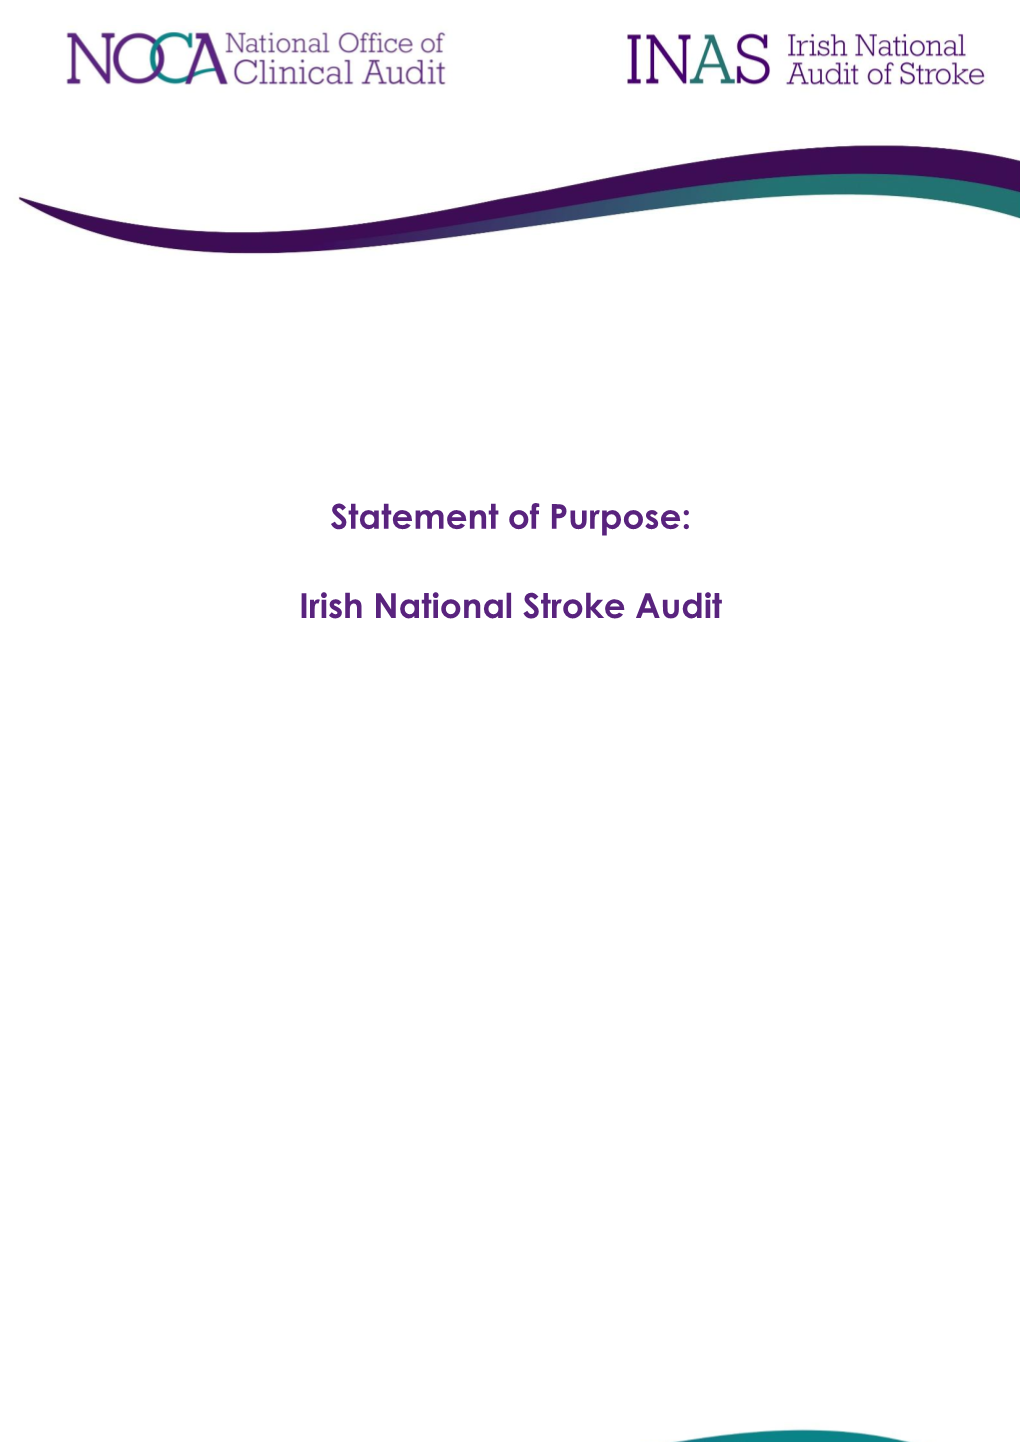 Statement of Purpose: Irish National Stroke Audit